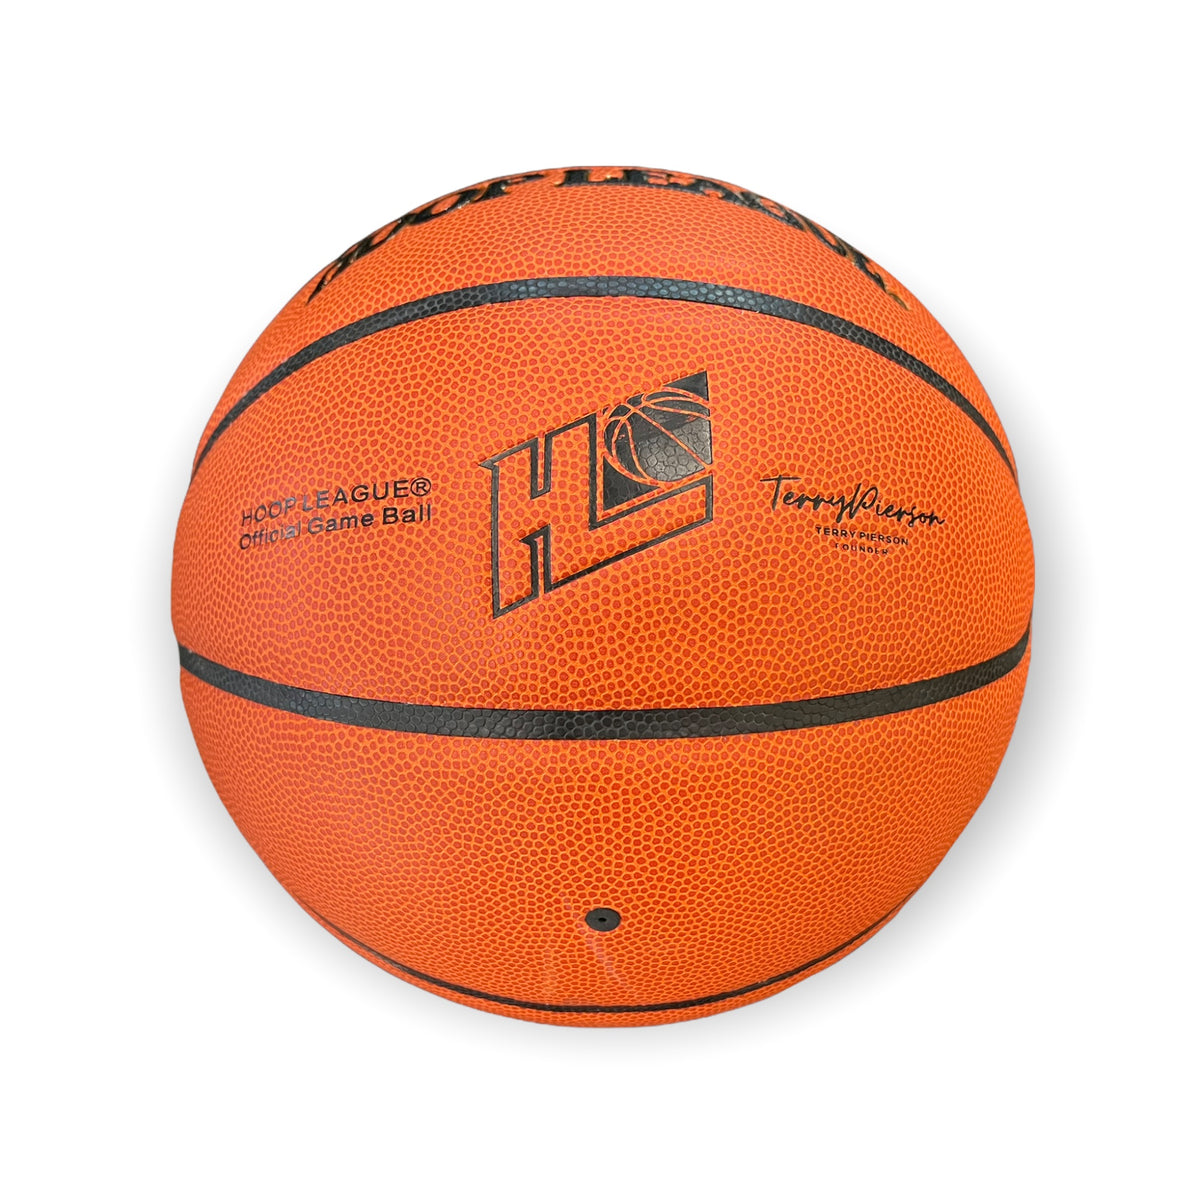 Hoop League MAX GRiP Top Microfiber Leather Indoor Game Basketball Size 29.5 ORANGE - Hoop League 